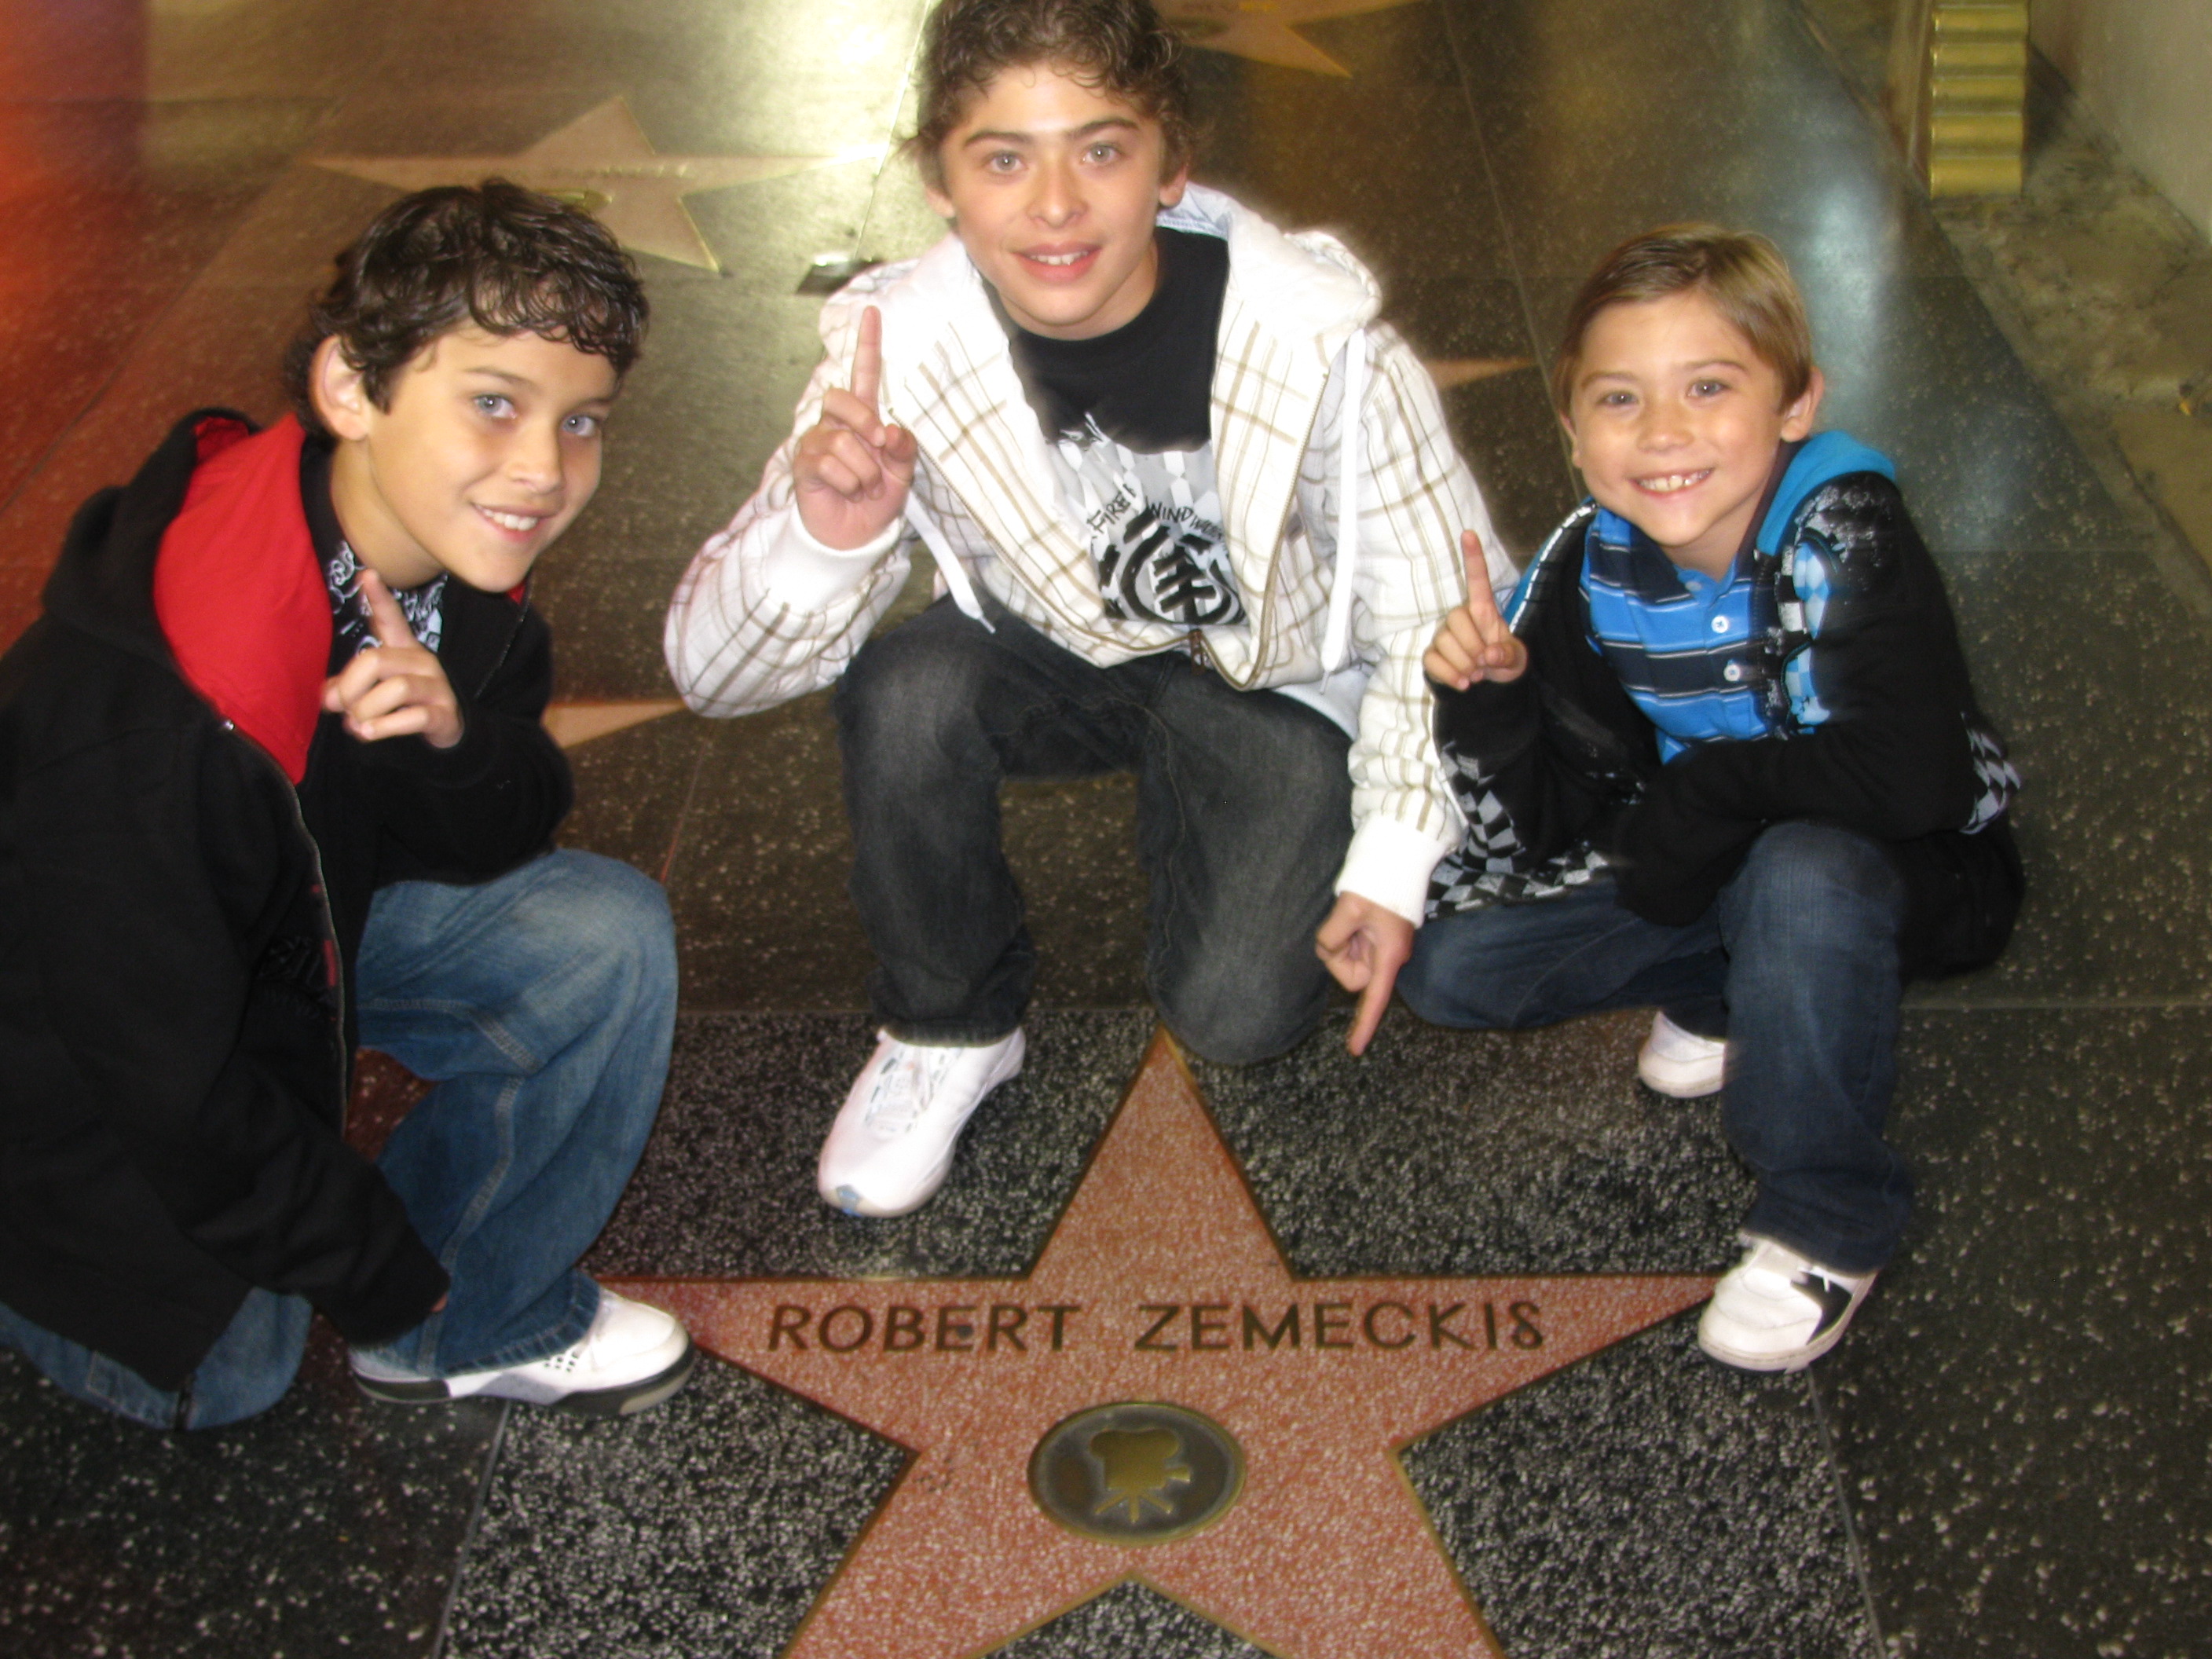 Robert, Ryan, and Raymond Ochoa in front of director Robert Zemeckis' Hollywood Star.